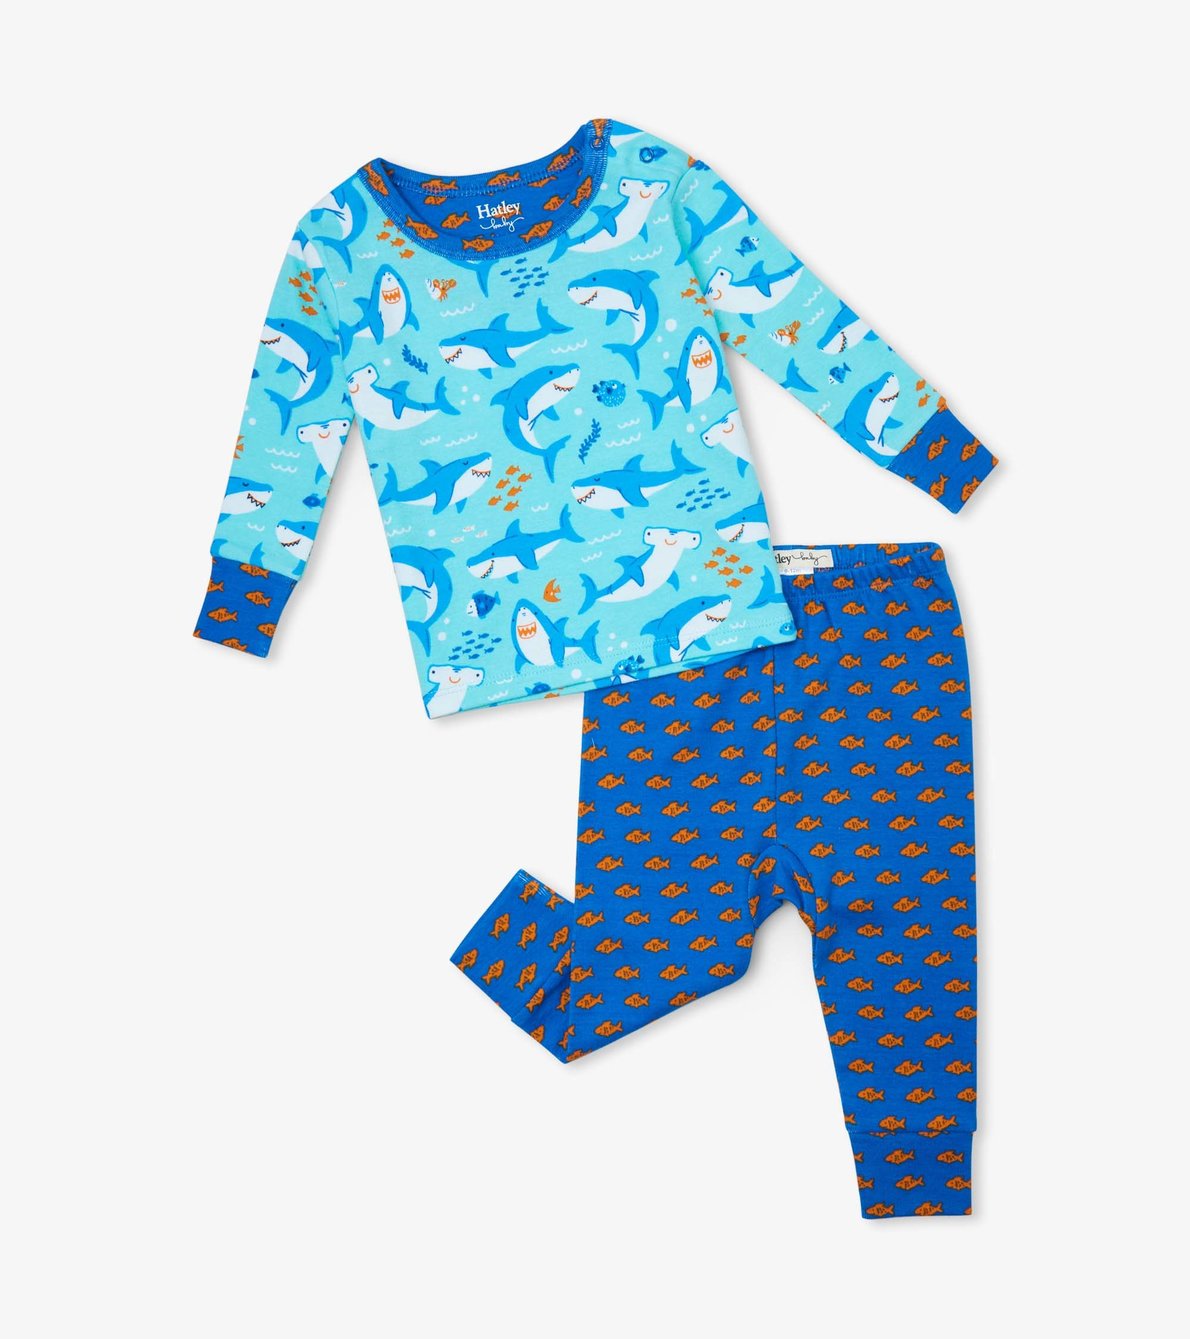 View larger image of Shark Party Organic Cotton Baby Pajama Set